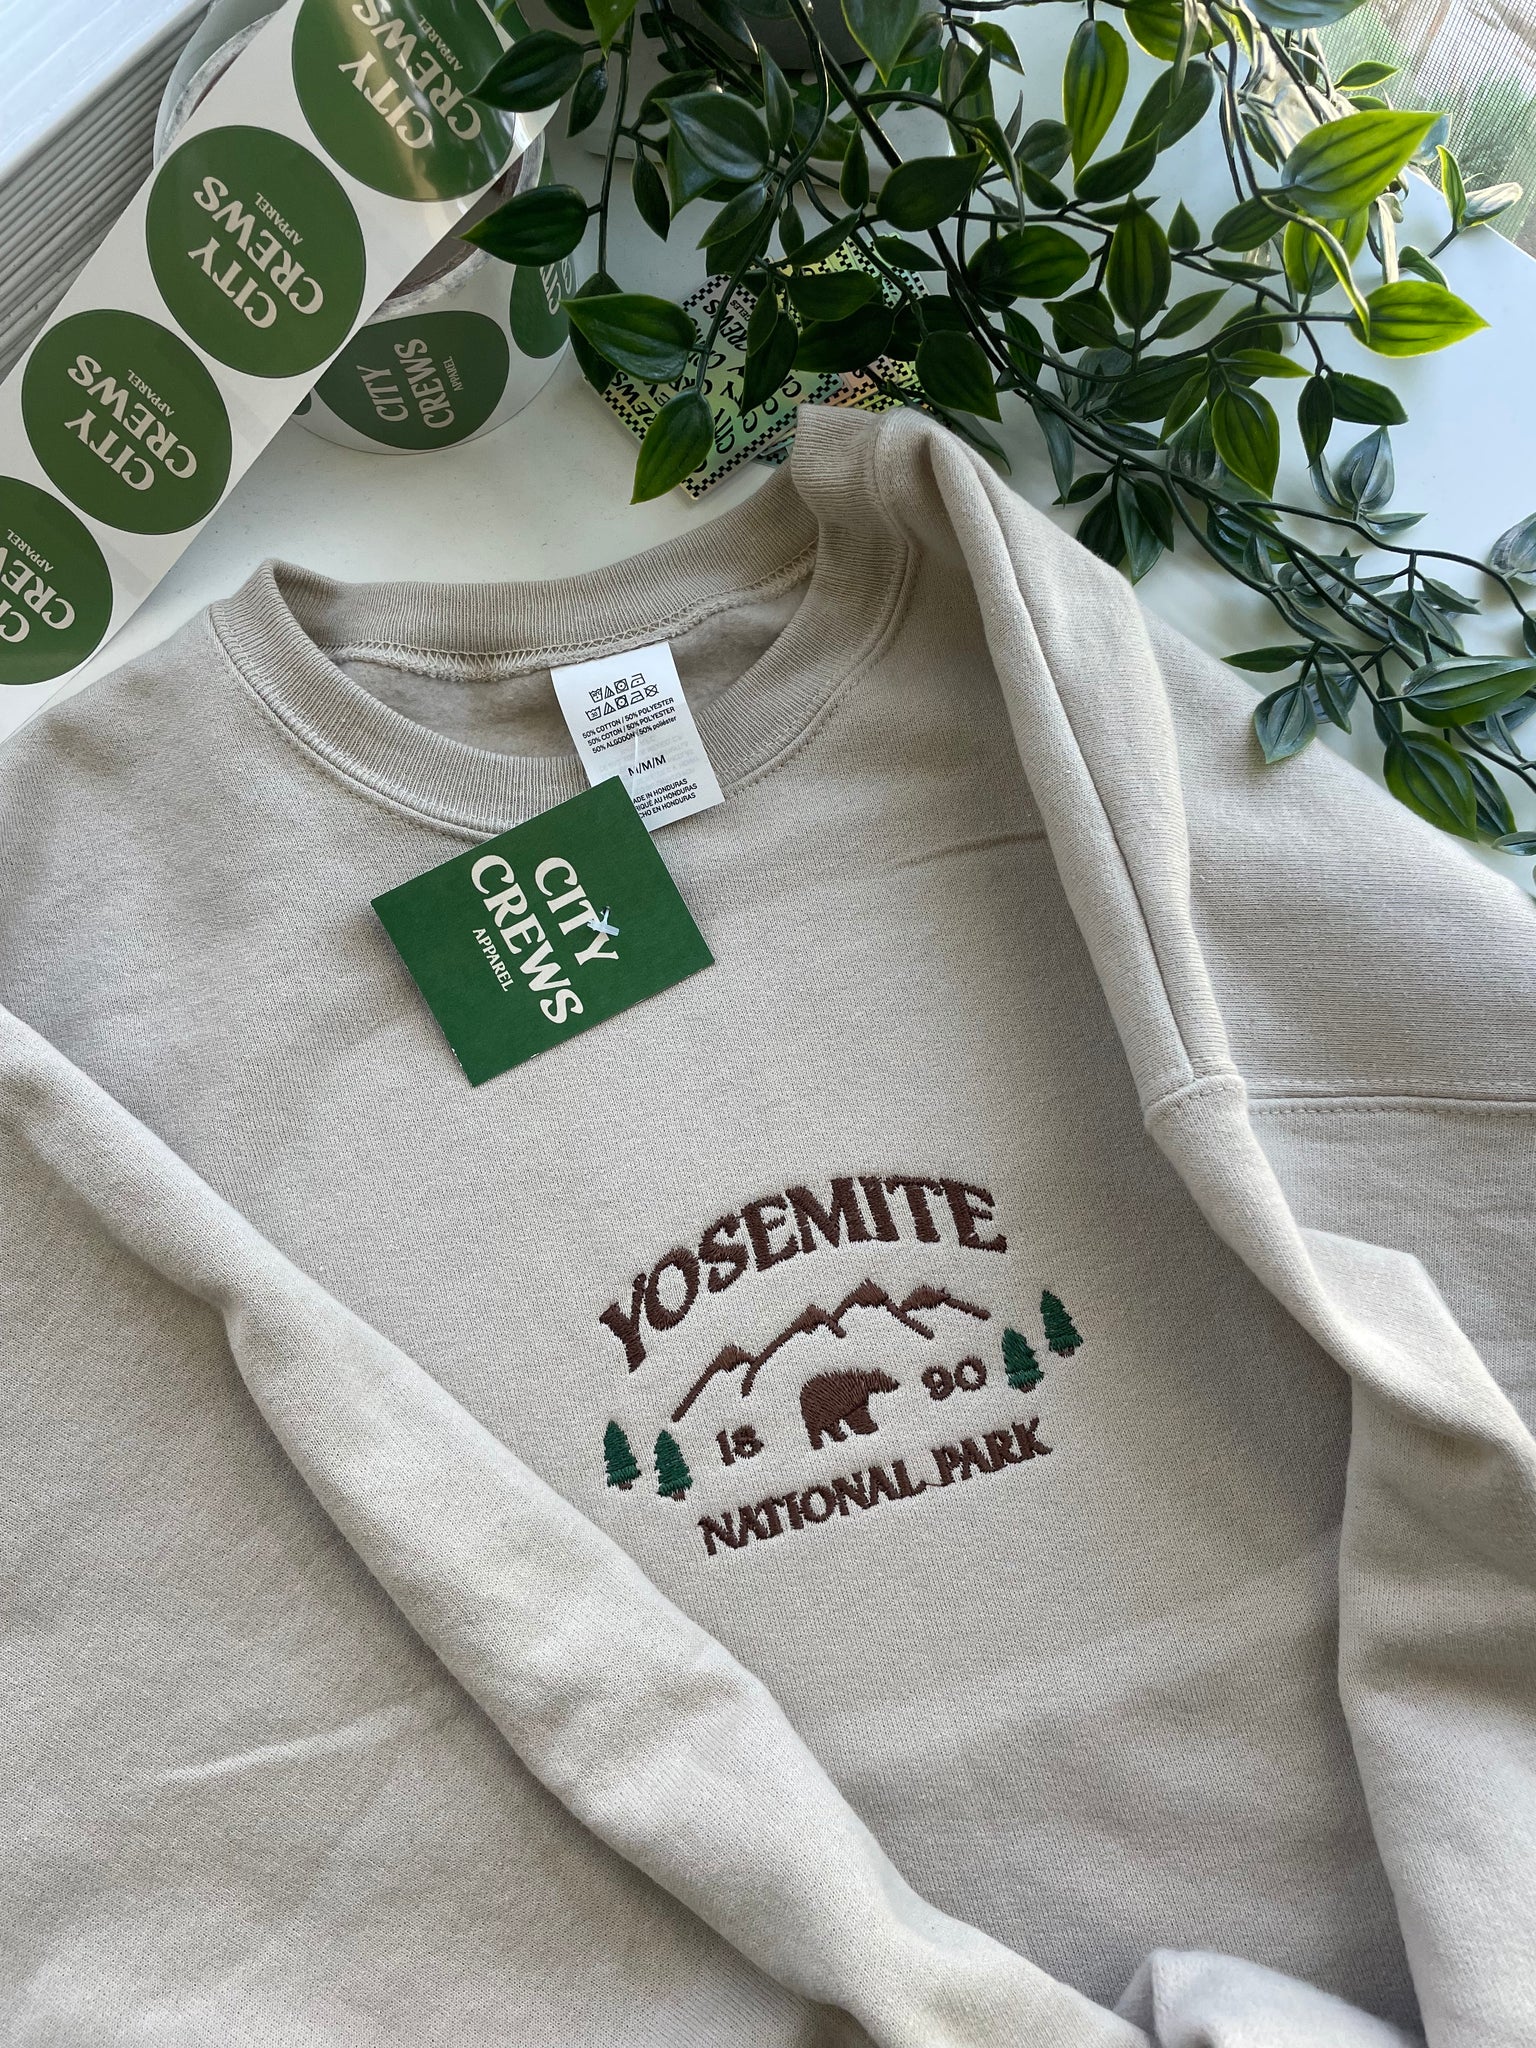 Yosemite Embroidered Sweatshirt